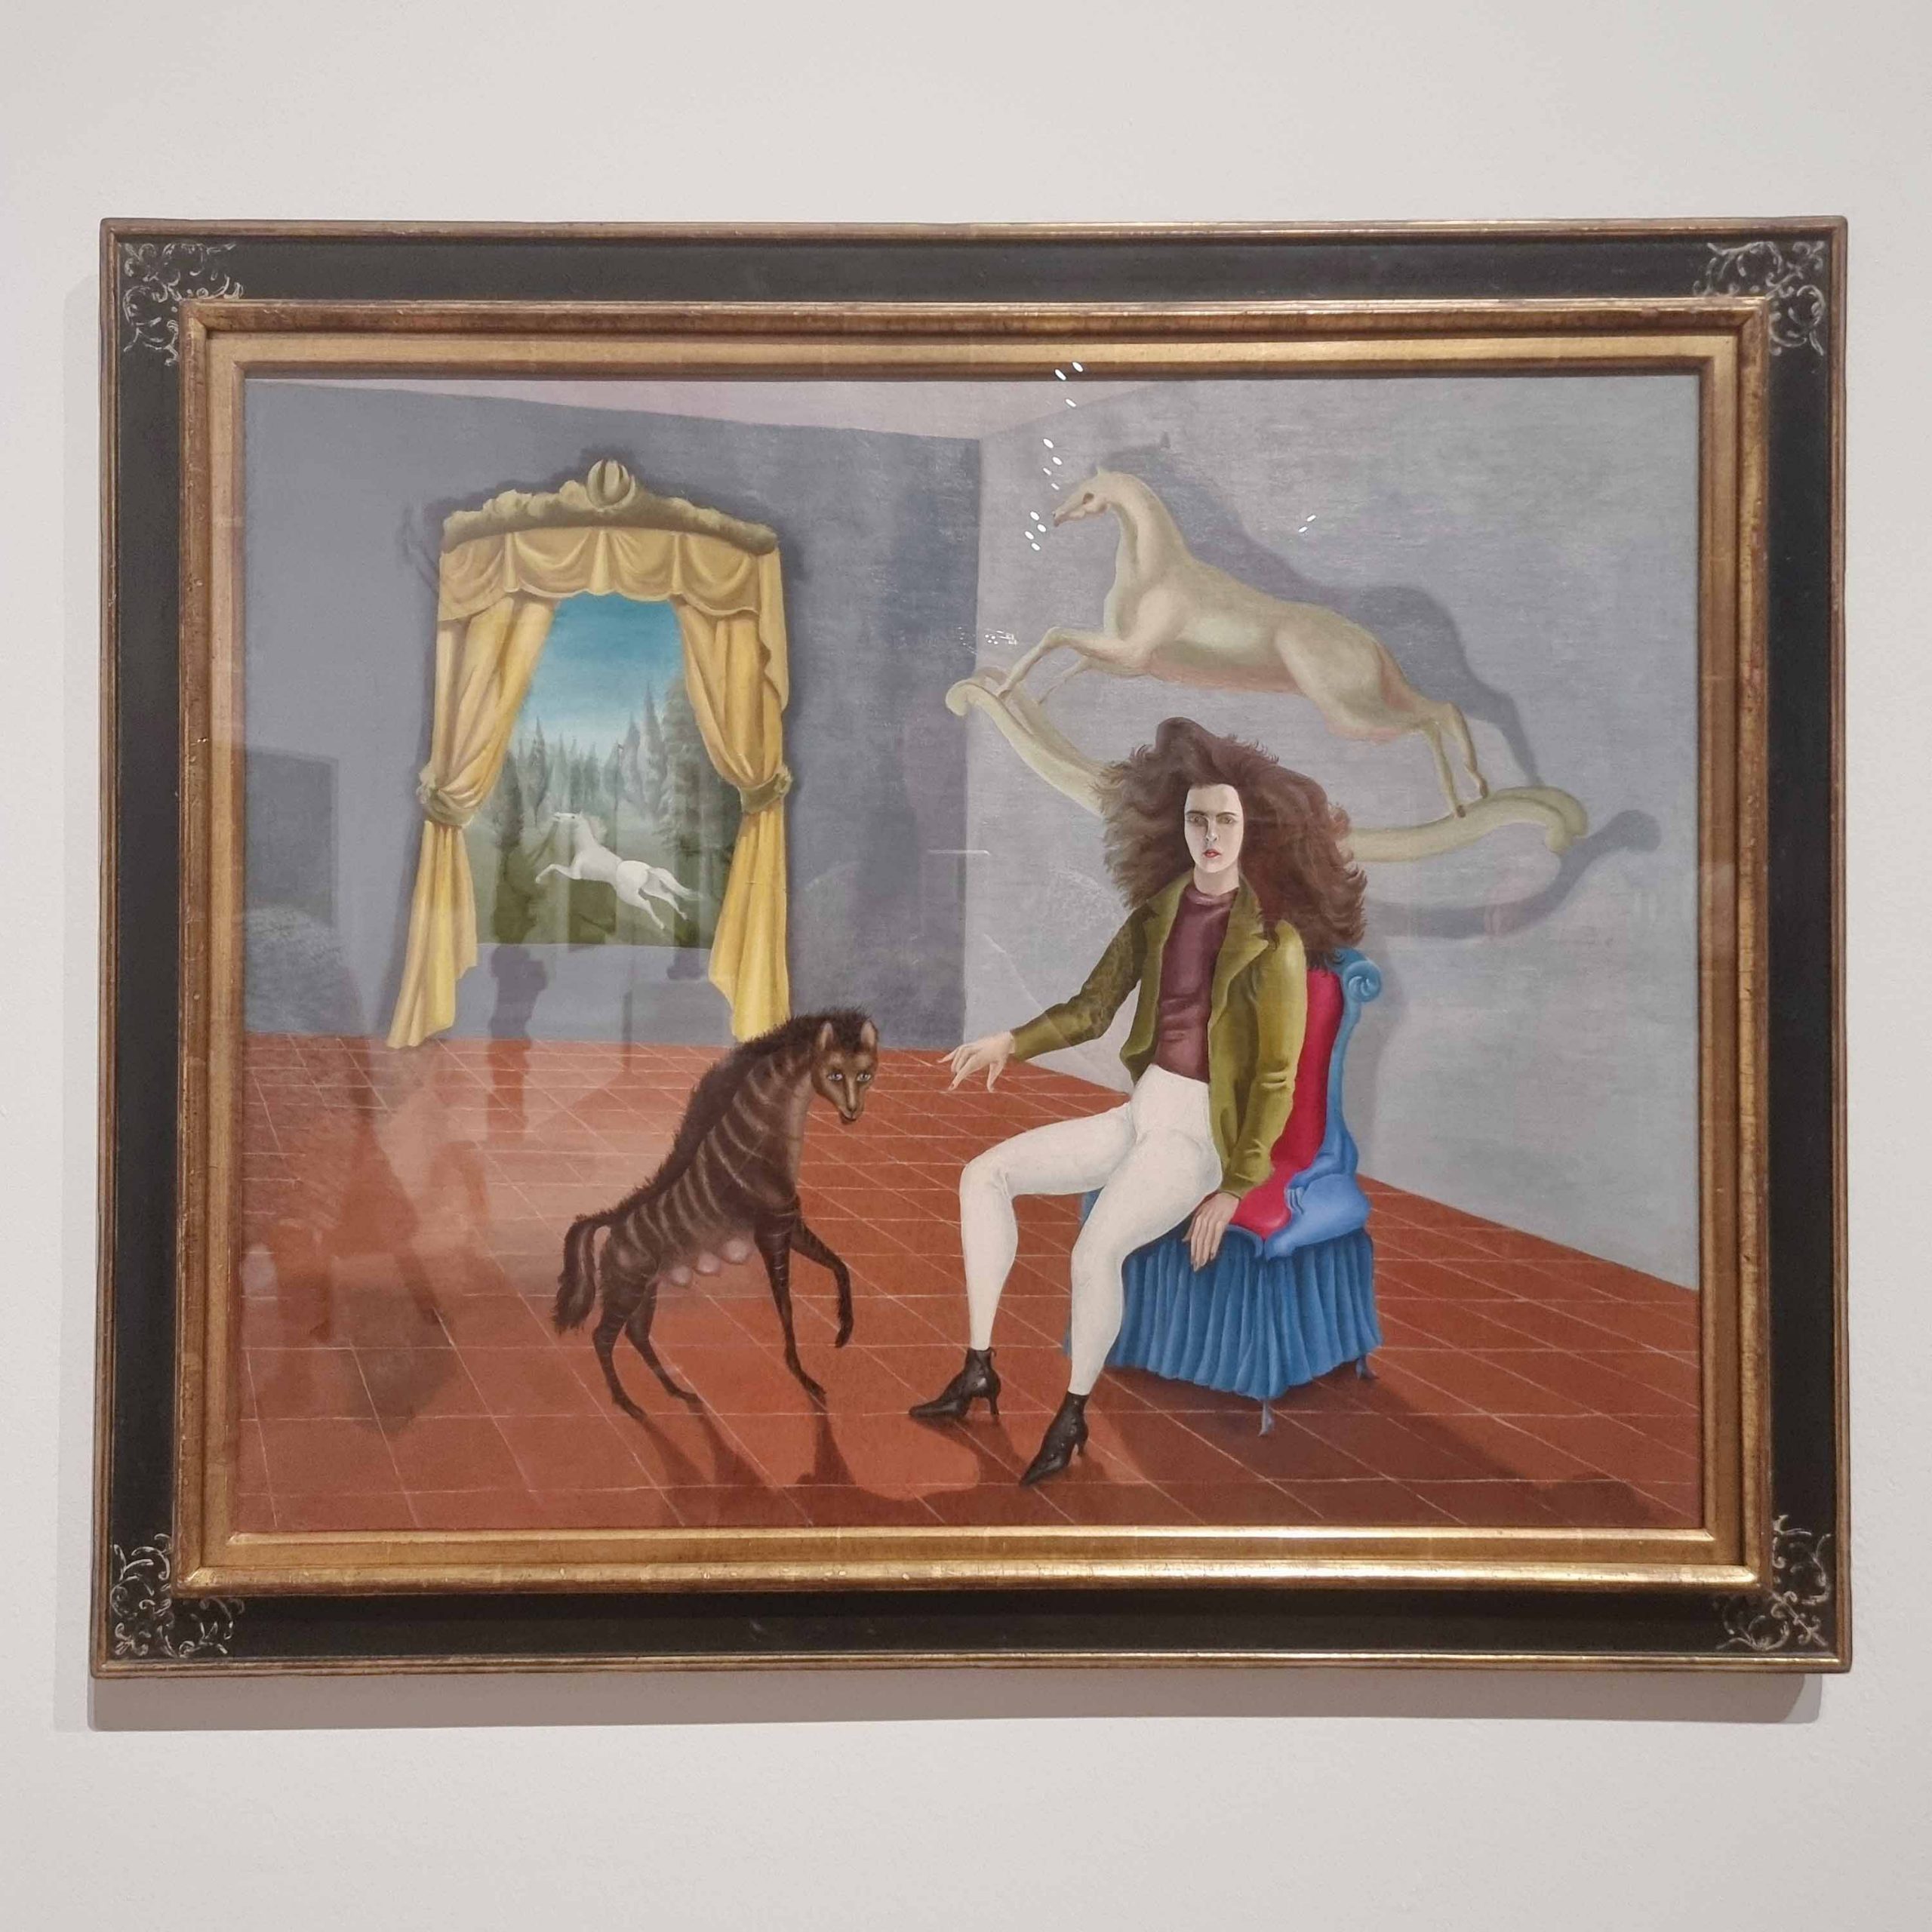 Exhibition view “Surrealism Beyond Borders” / Leonora Carrington / Self Portrait / 1937-38 / © Metropolitan Museum of Art, New York